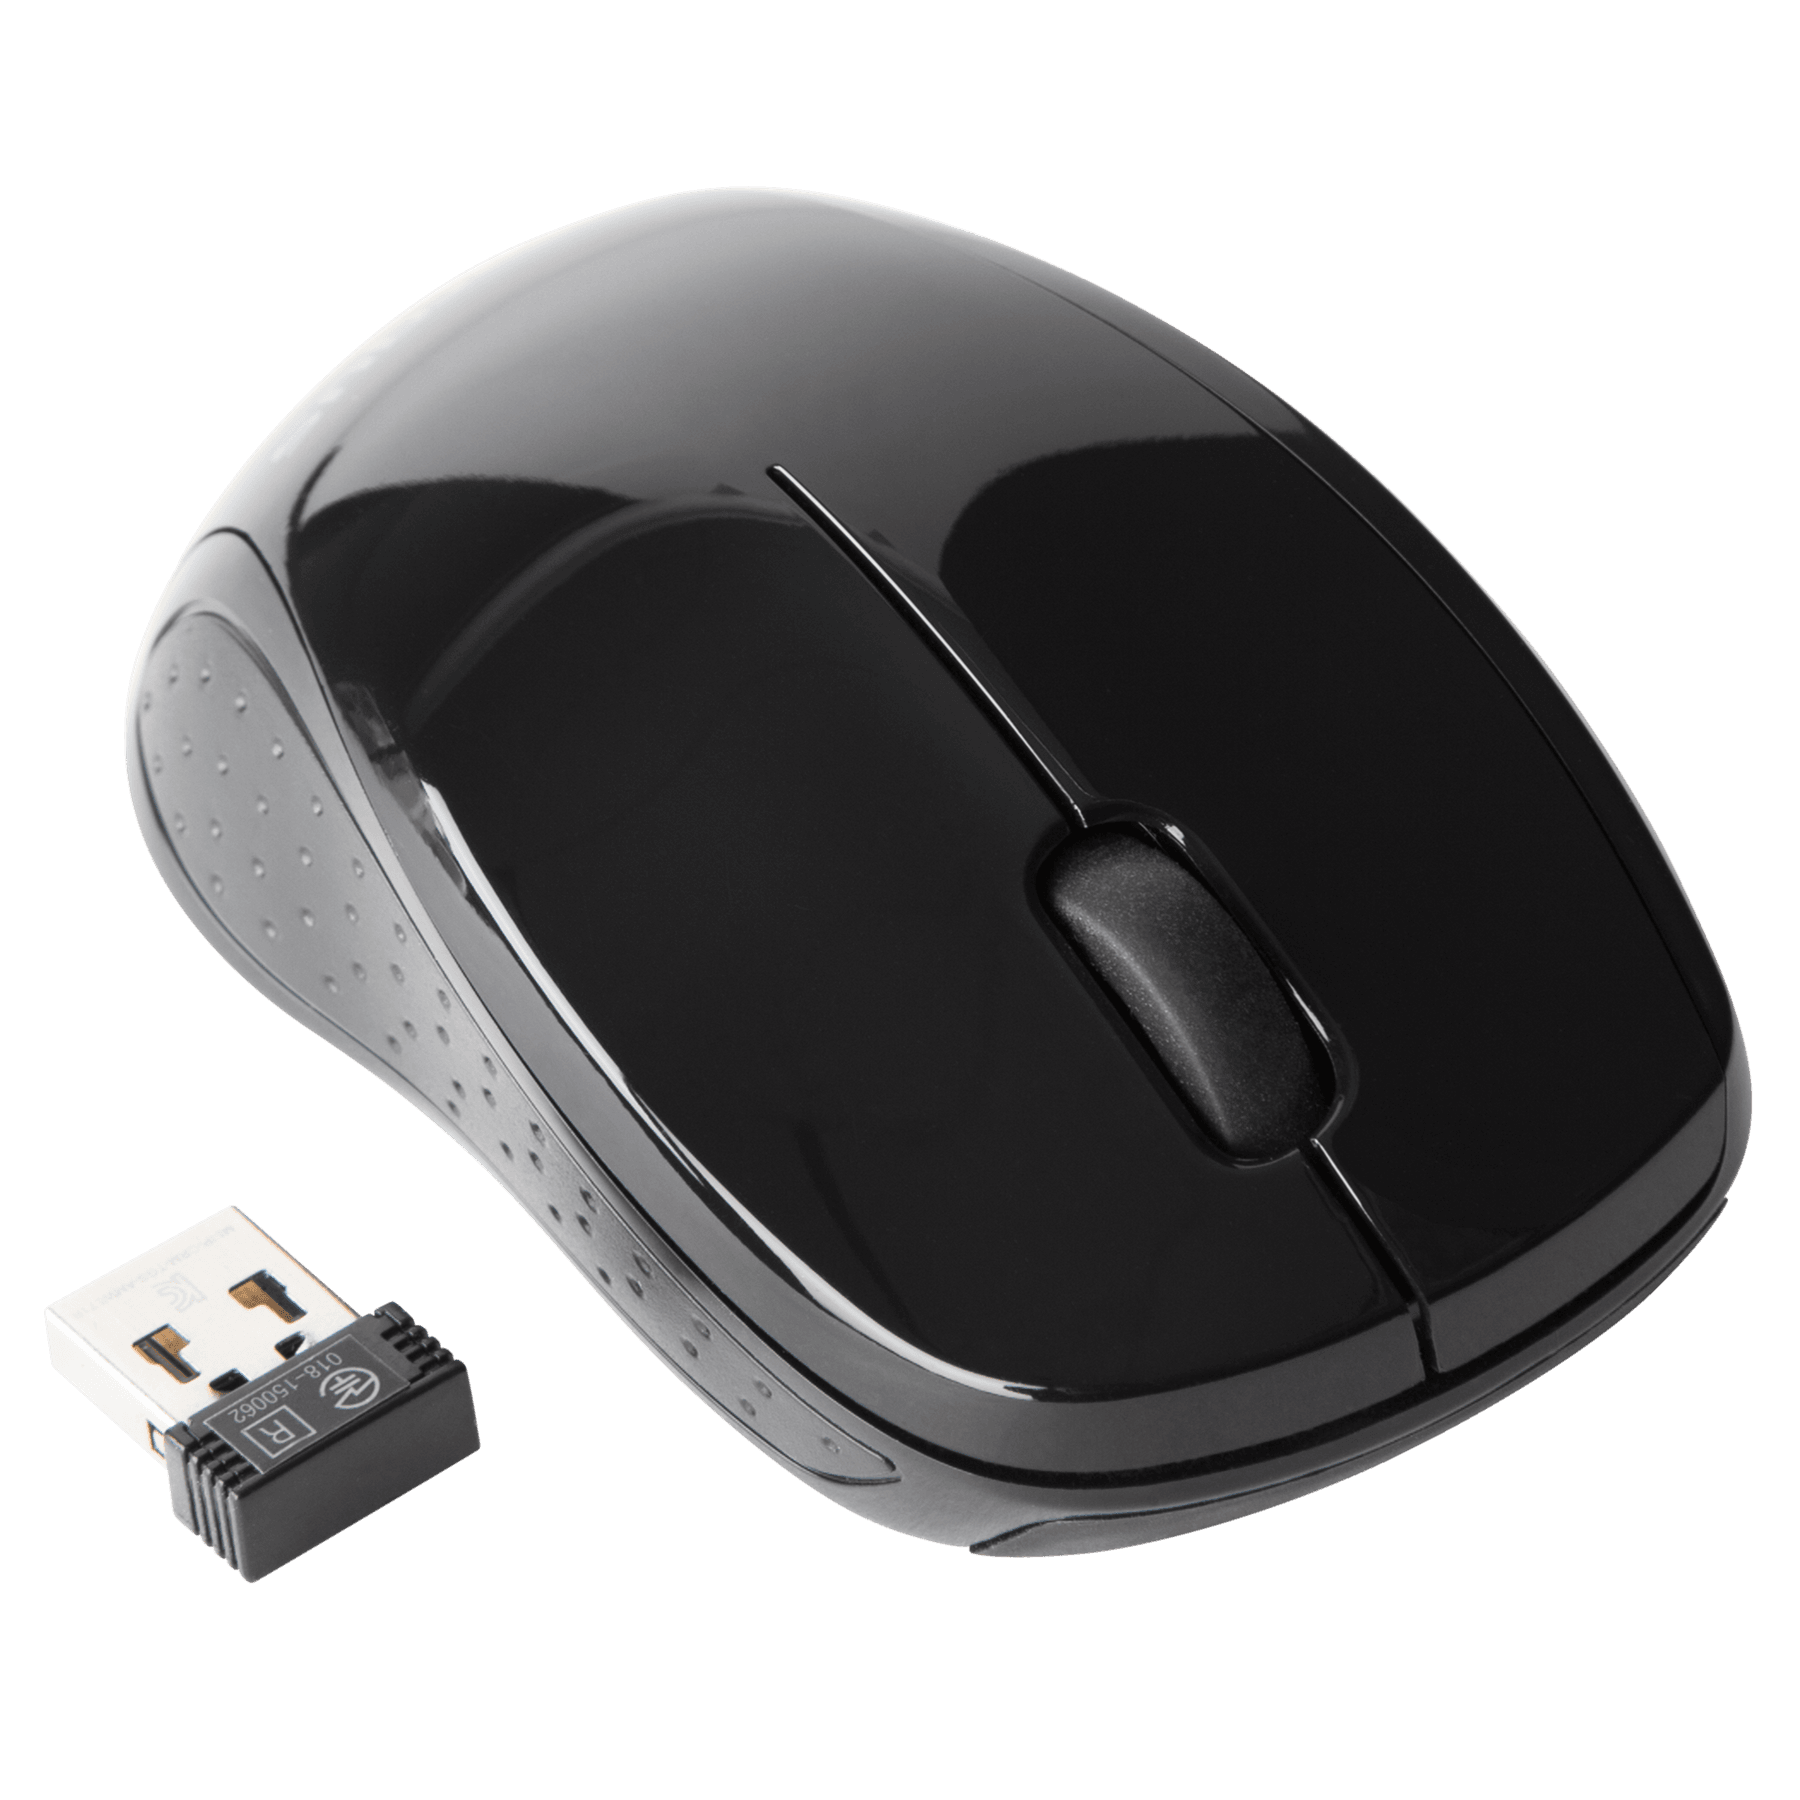 Мышь беспроводная logitech m650. Мышь беспроводная dell Wireless Mouse 220, черный. Мышь Logitech Wireless Mouse m560 White USB. Logitech m175 мышь беспроводная. Мышь Logitech m171 Blue Optical Mouse Wireless (910-004640) USB.